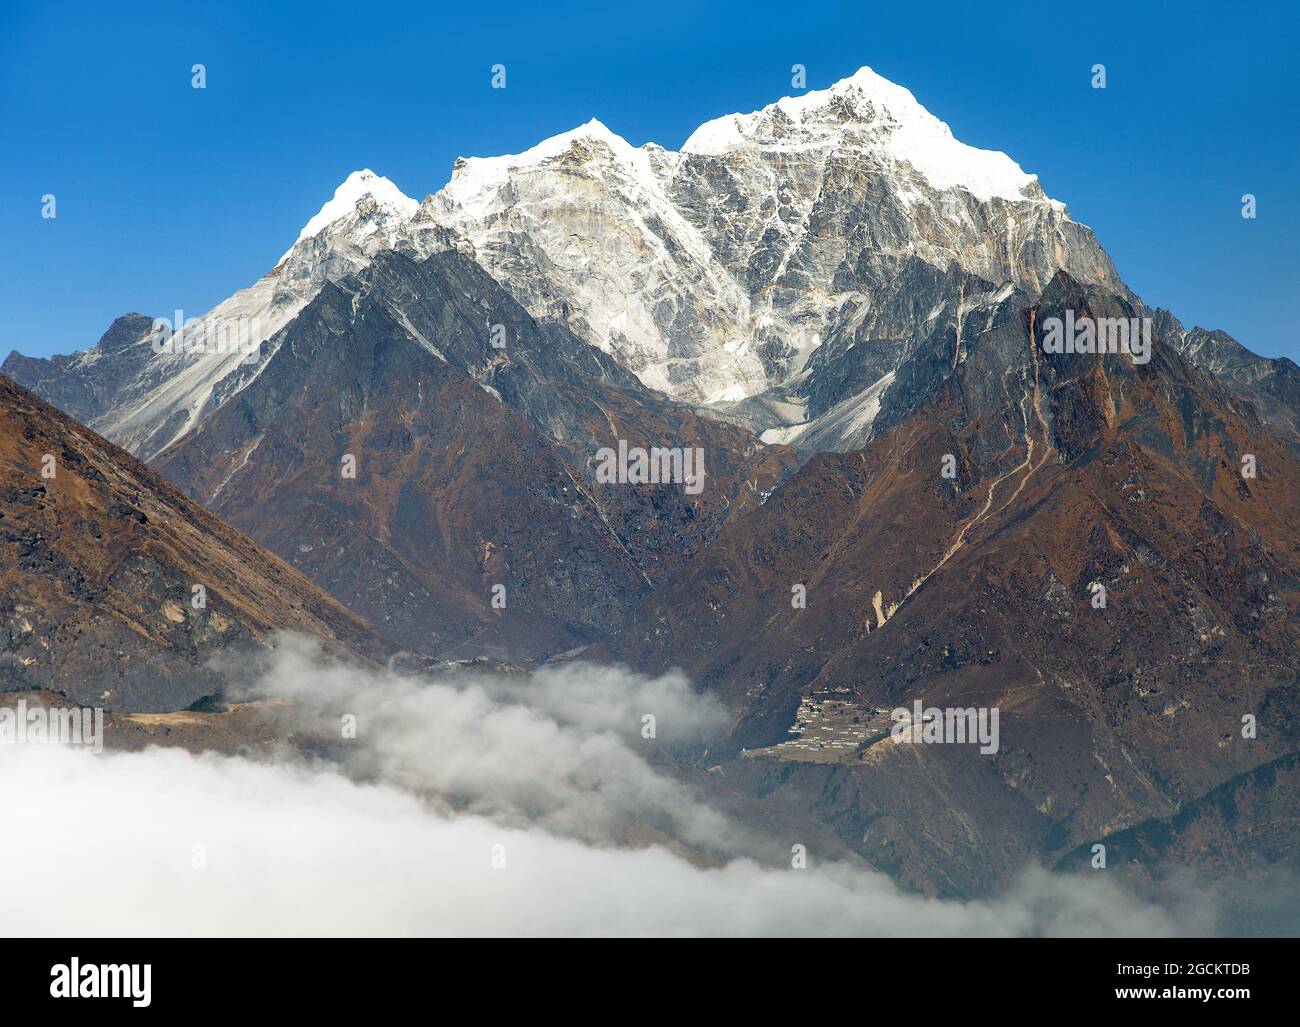 View of Portse village, mount cholatse and Tabuche peak - way to Everest base camp - Sagarmatha national park - Nepal Stock Photo